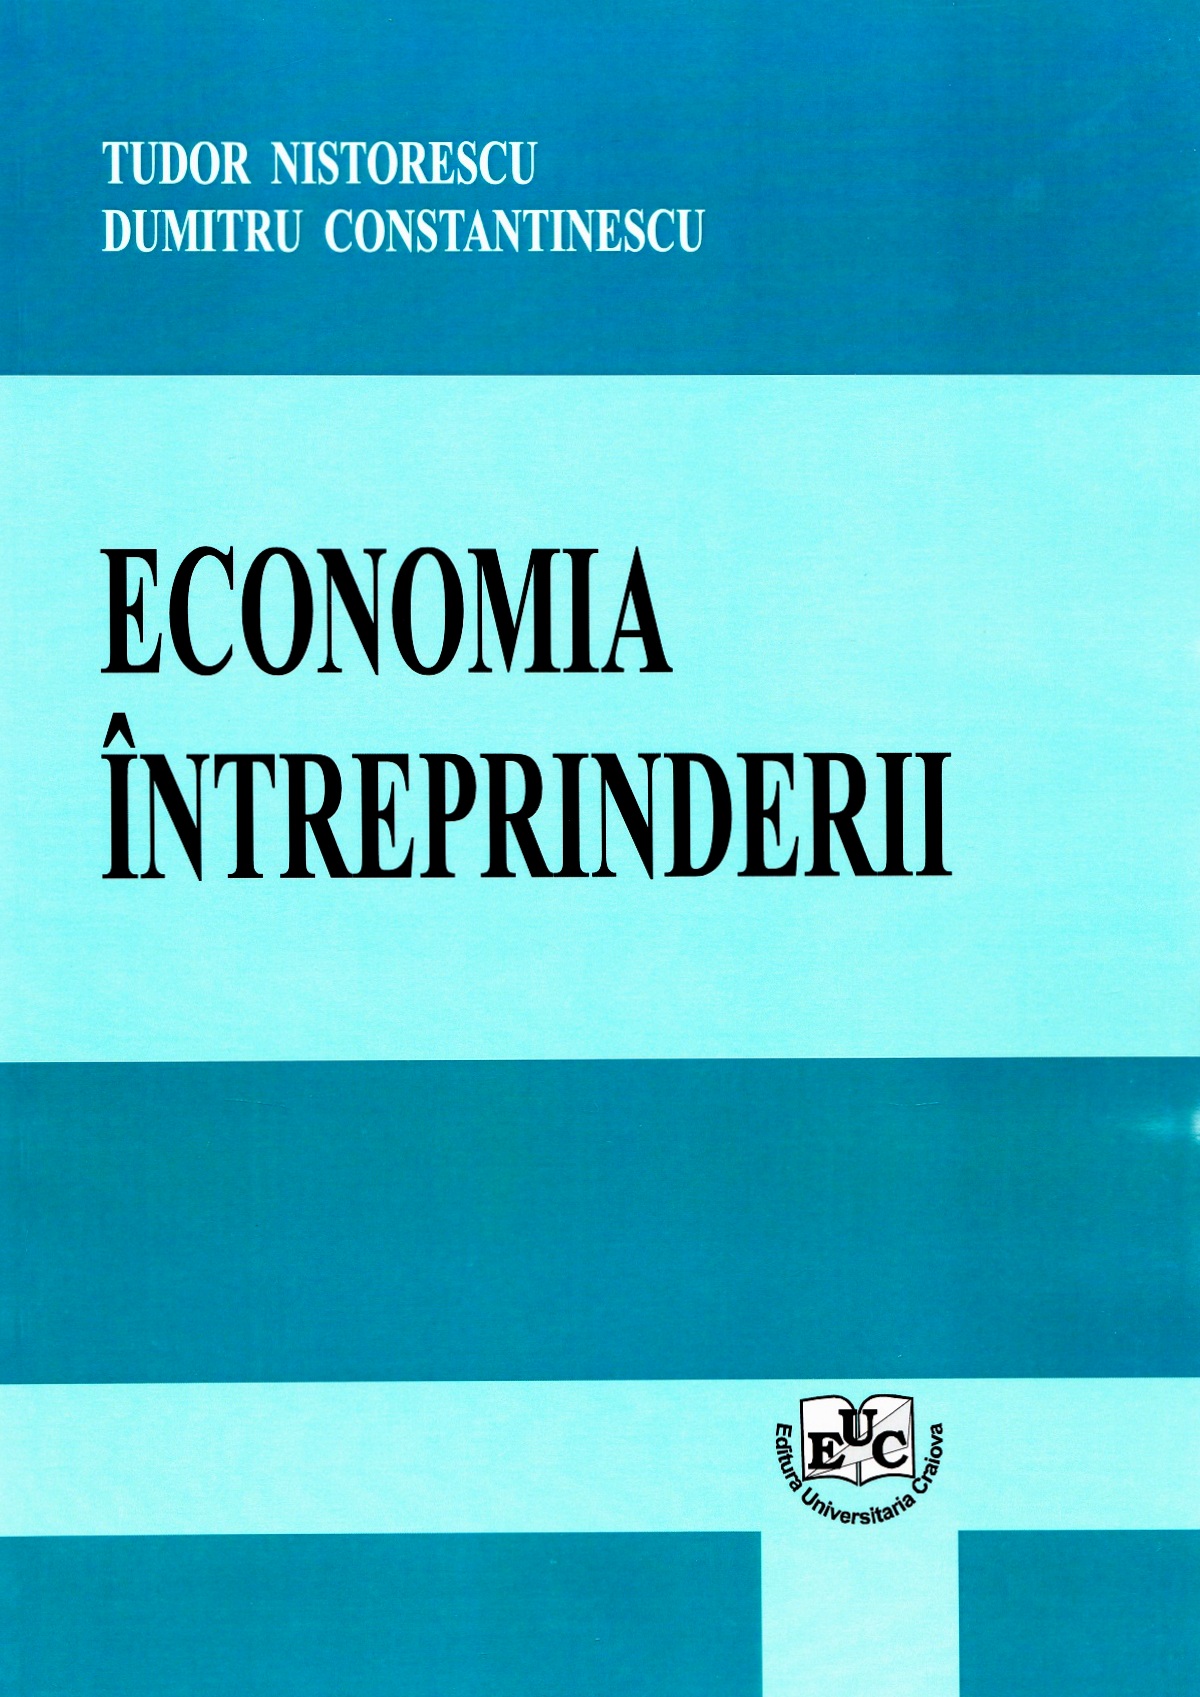 Economia intreprinderii - Tudor Nistorescu, Dumitru Constantinescu